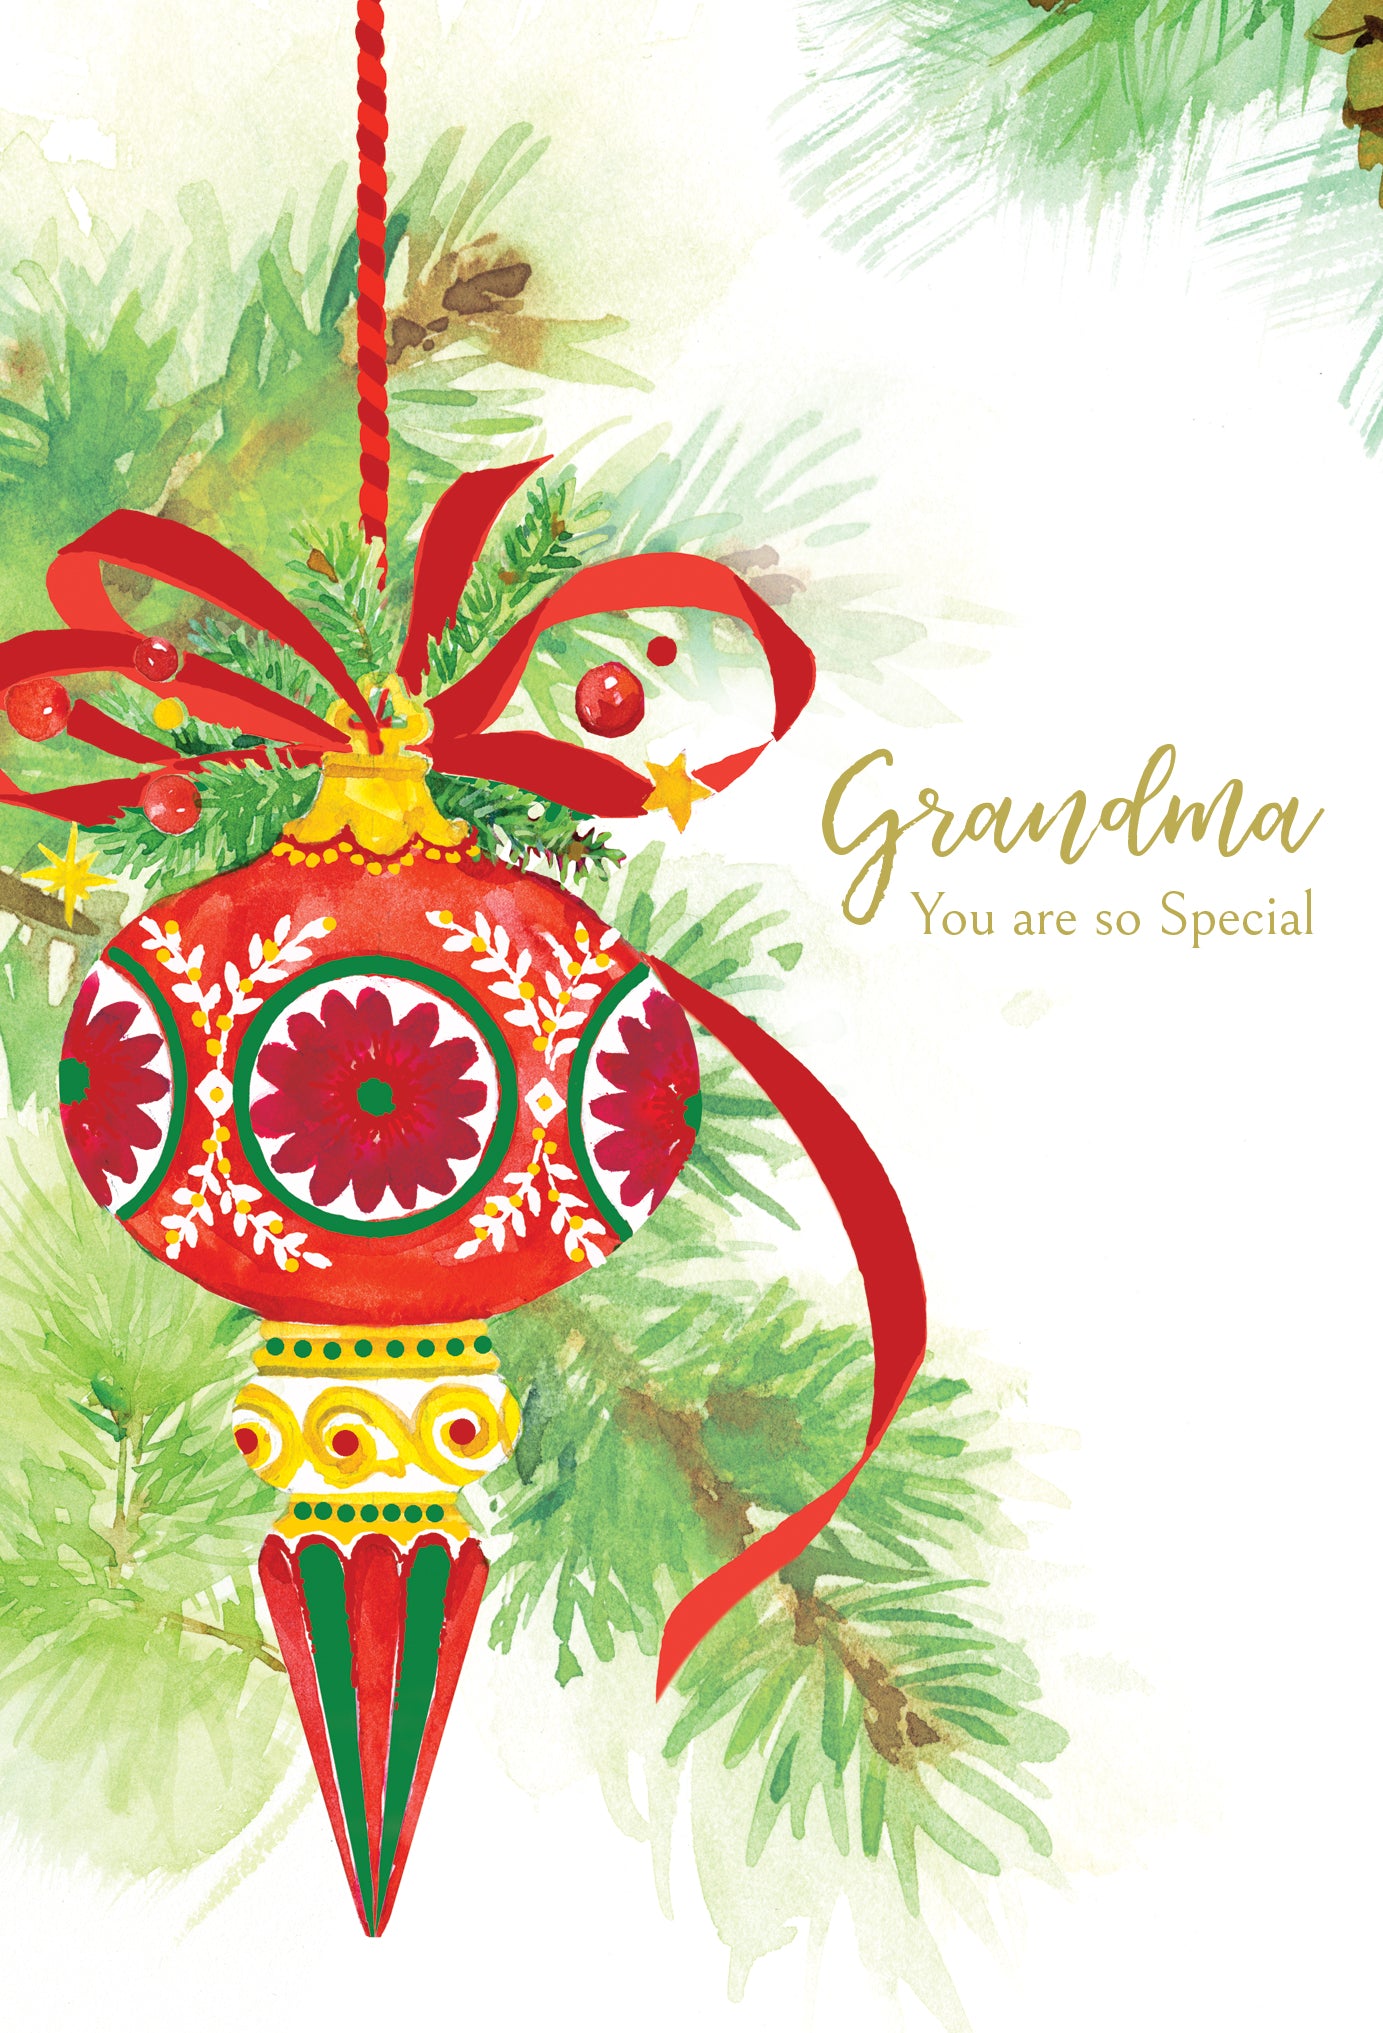 Grandmother Christmas tree ornaments - Christmas Card - Cardmore